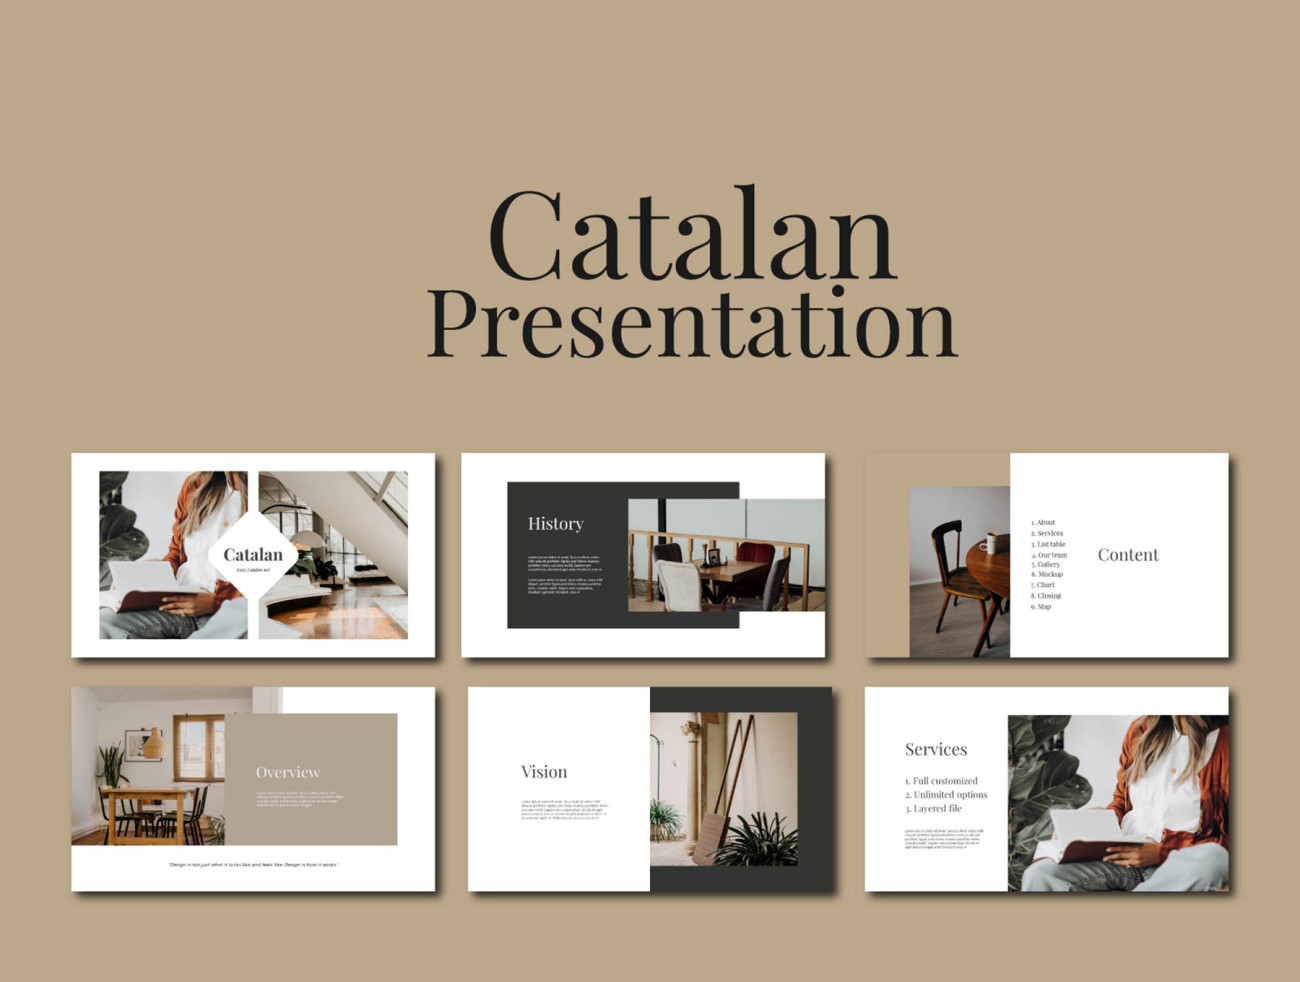 Catalan PowerPoint Template ppt模板-PPT素材-到位啦UI